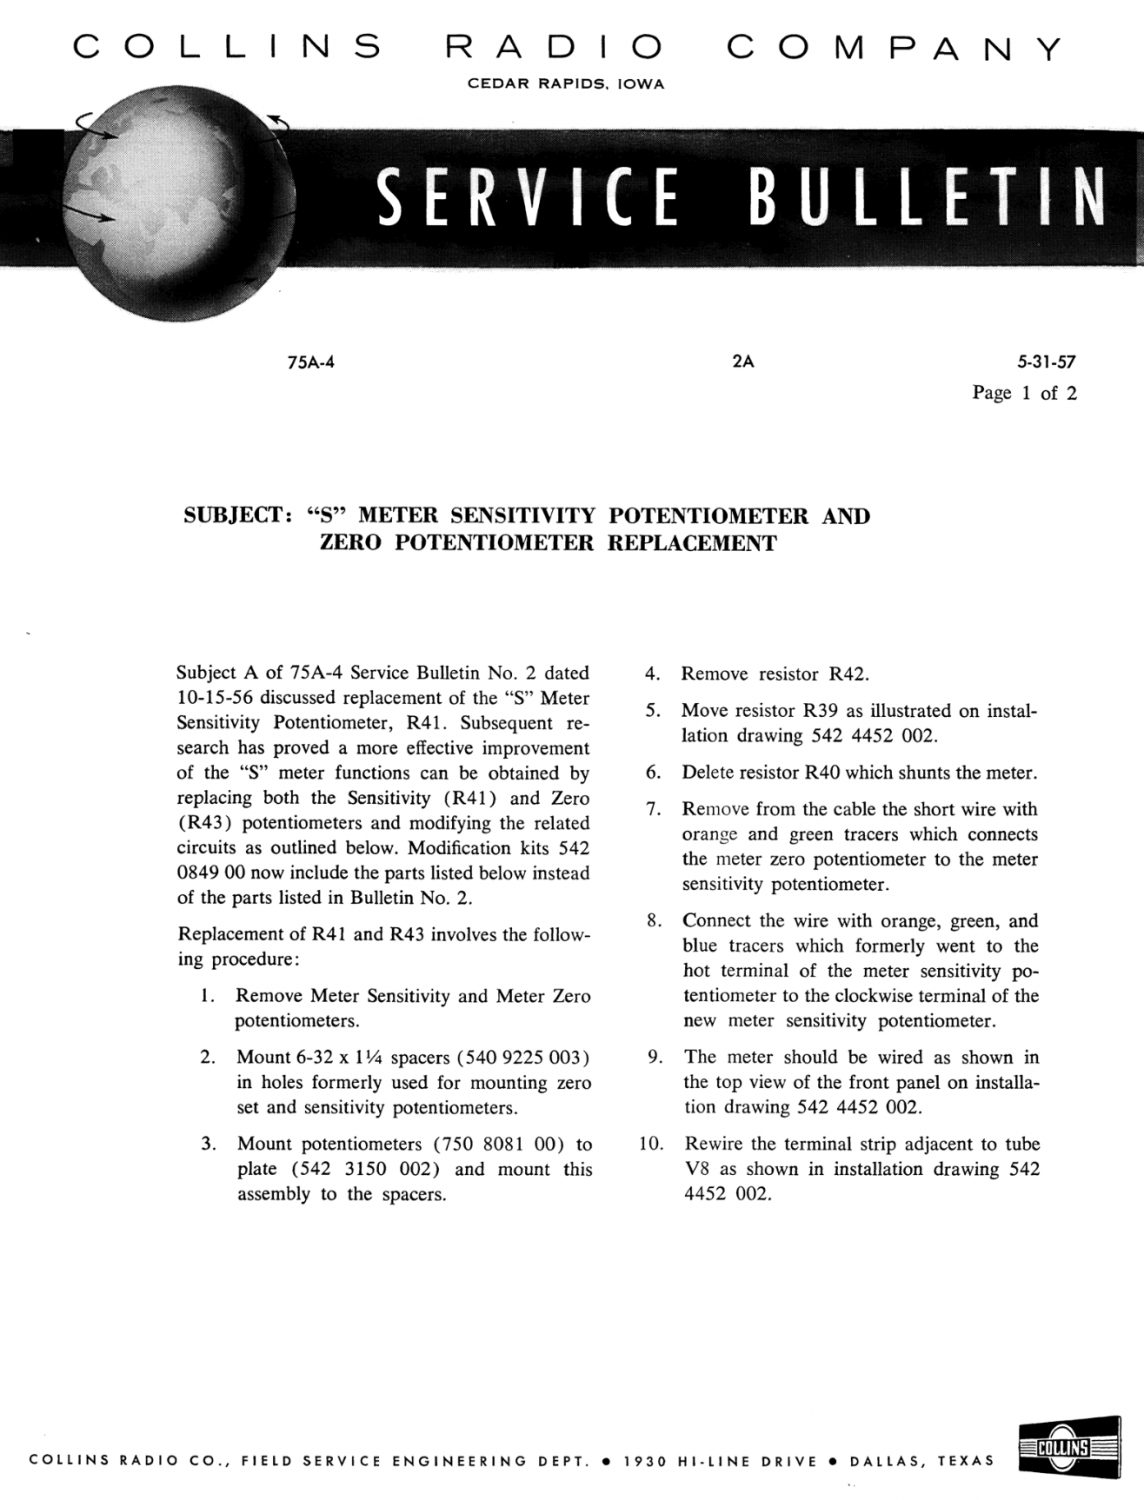 Collins 75A-4 Amateur Band Receiver - Service Bulletin Number 2A - (1957-05)